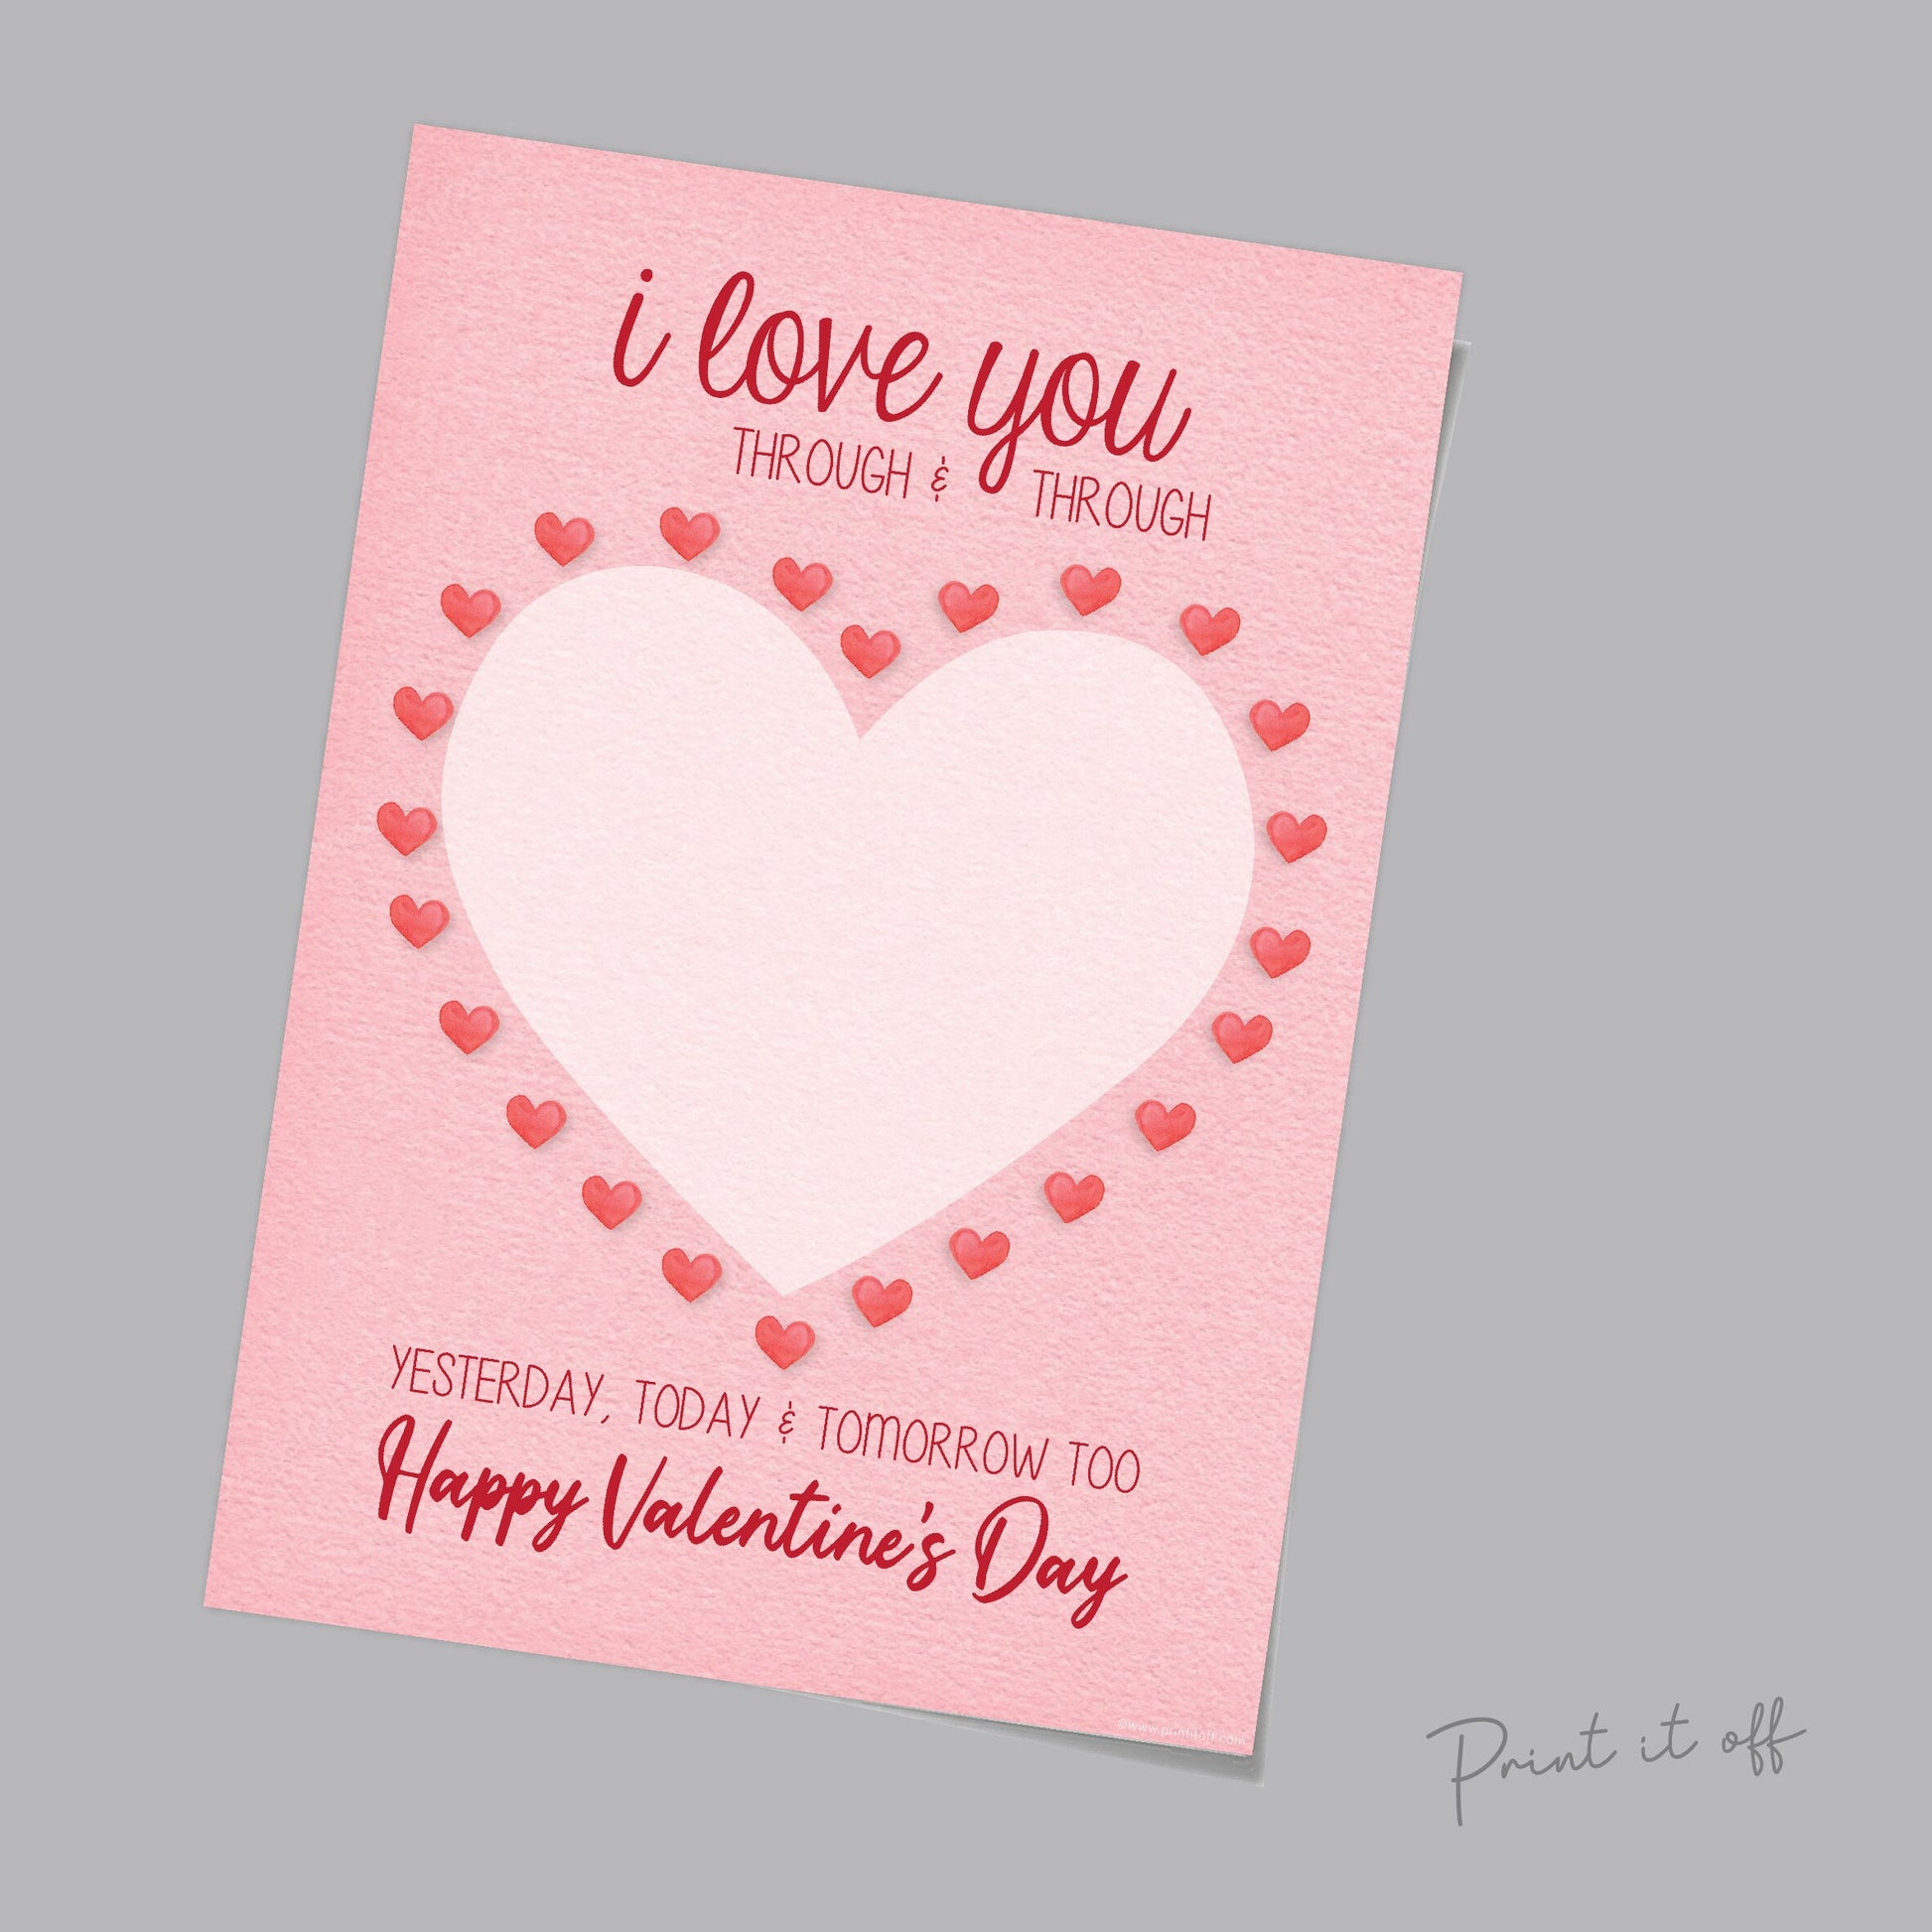 I Love You Through & Through / Handprint Footprint Heart / Valentine's Poem Card DIY Craft Art / Baby Kids Toddler / Print It Off 0145